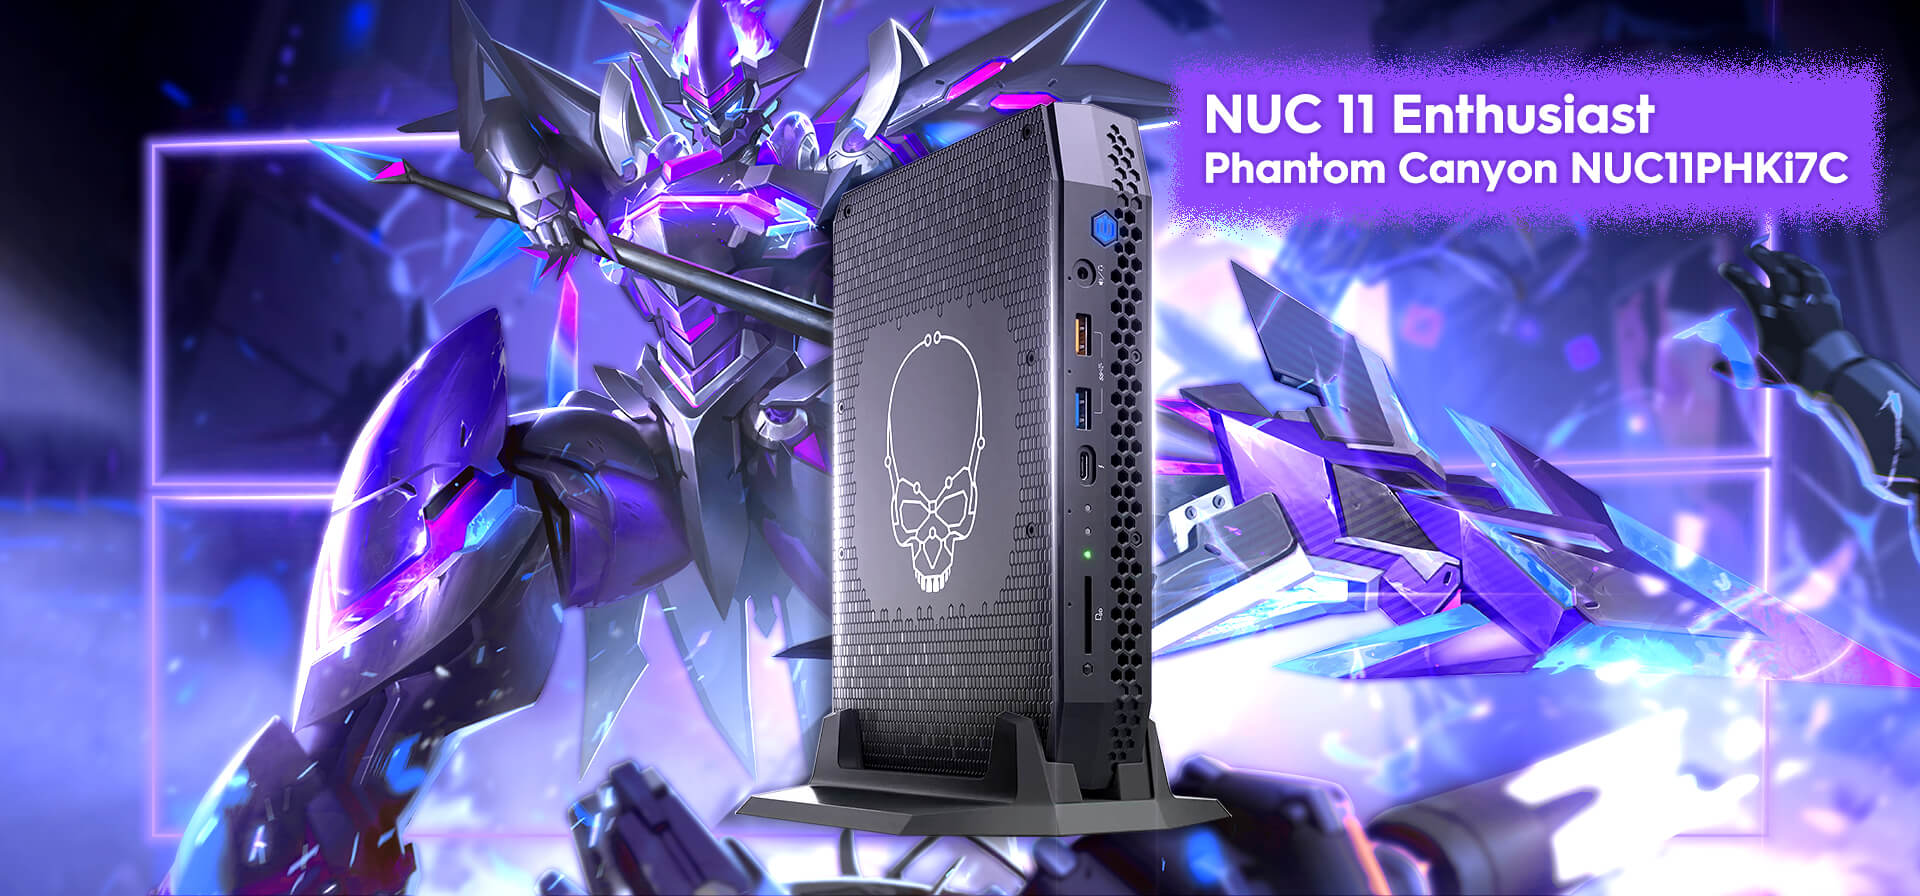 NUC11PHKi7C - Mini PC Gamer i7 RTX 2060 6GB